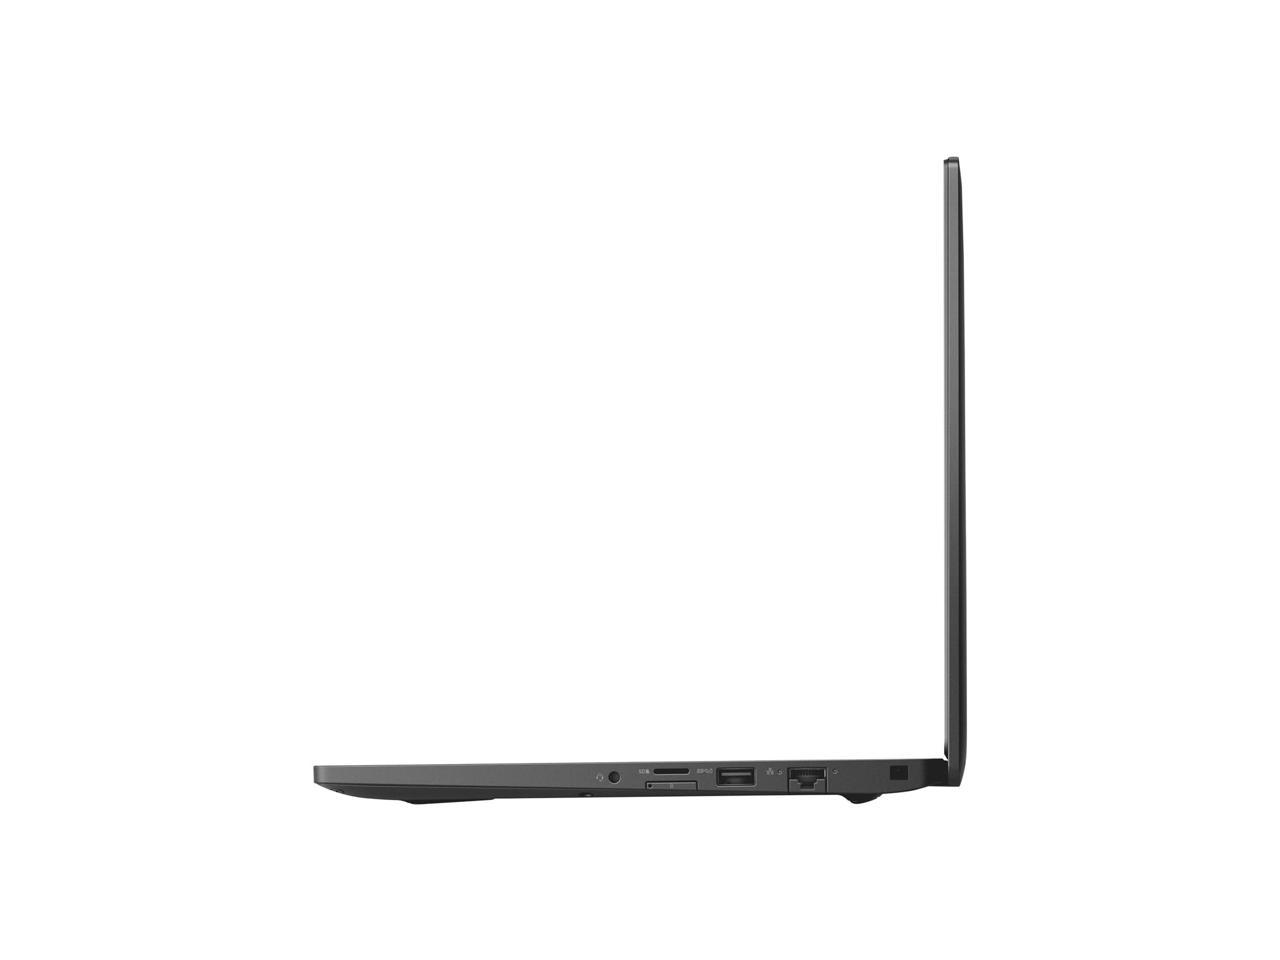 Dell Latitude 7280 12.5" Laptop, Intel Core i5 6300U 2.4Ghz, 8GB DDR4, 256GB NVMe PCIe M.2 SSD, USB Type-C, HDMI, Webcam, Windows 10 Pro (Grade B)